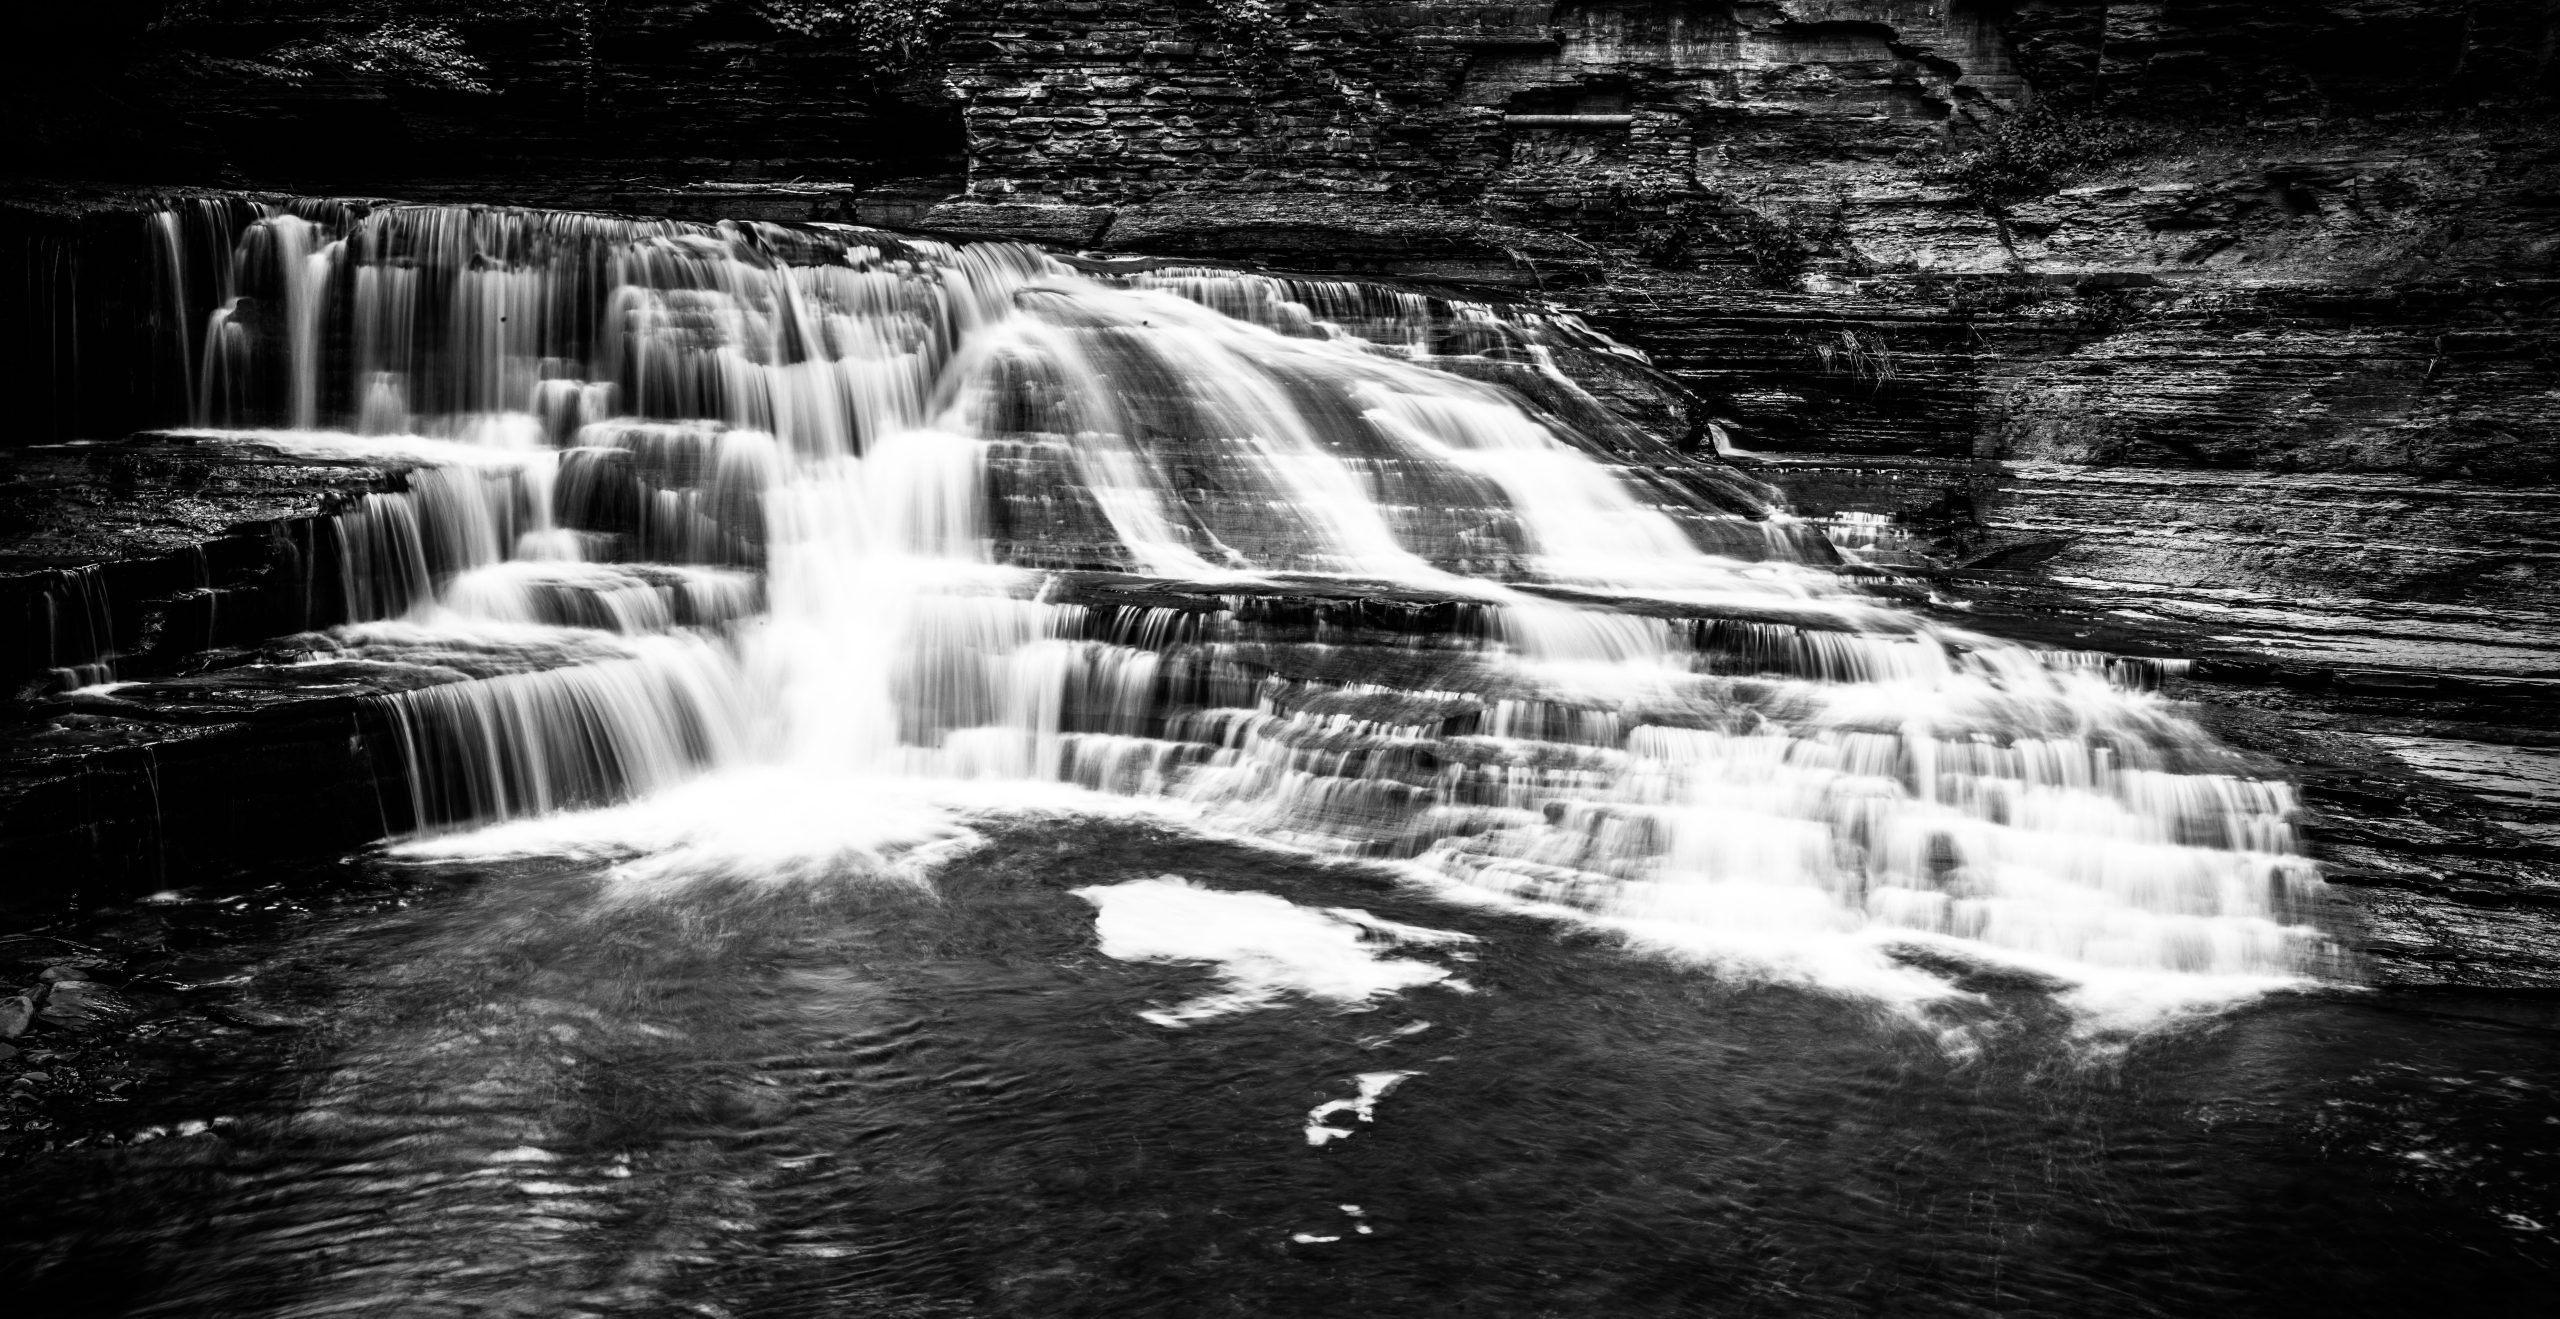 Ithaca Series: Waterfall #3